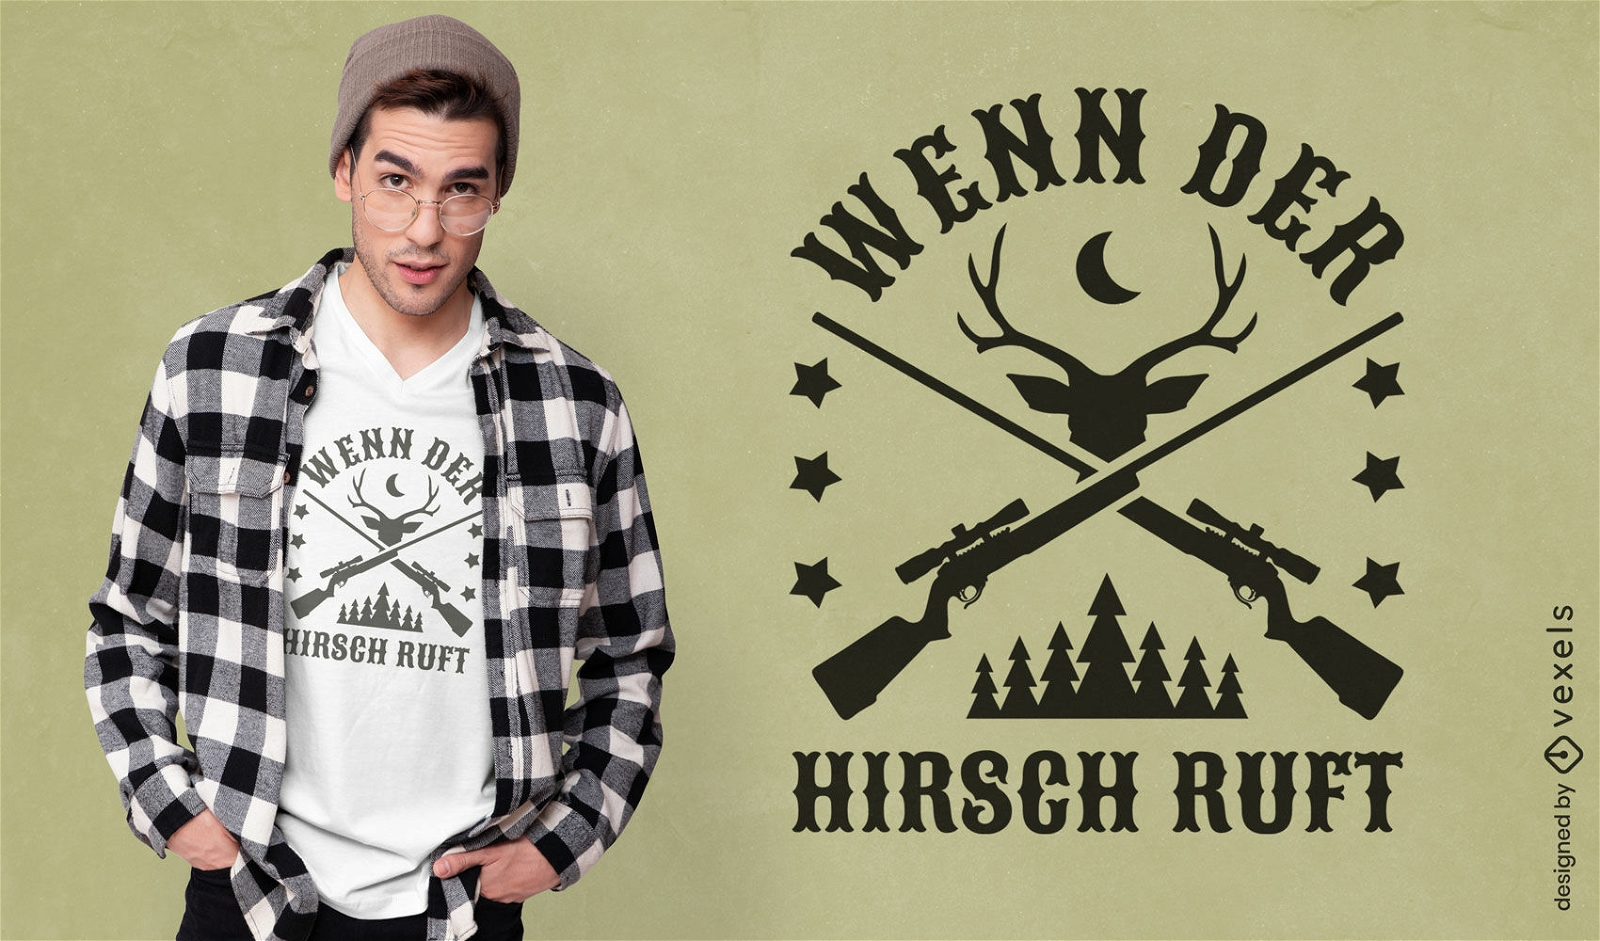 Hunting deer silhouette t-shirt design